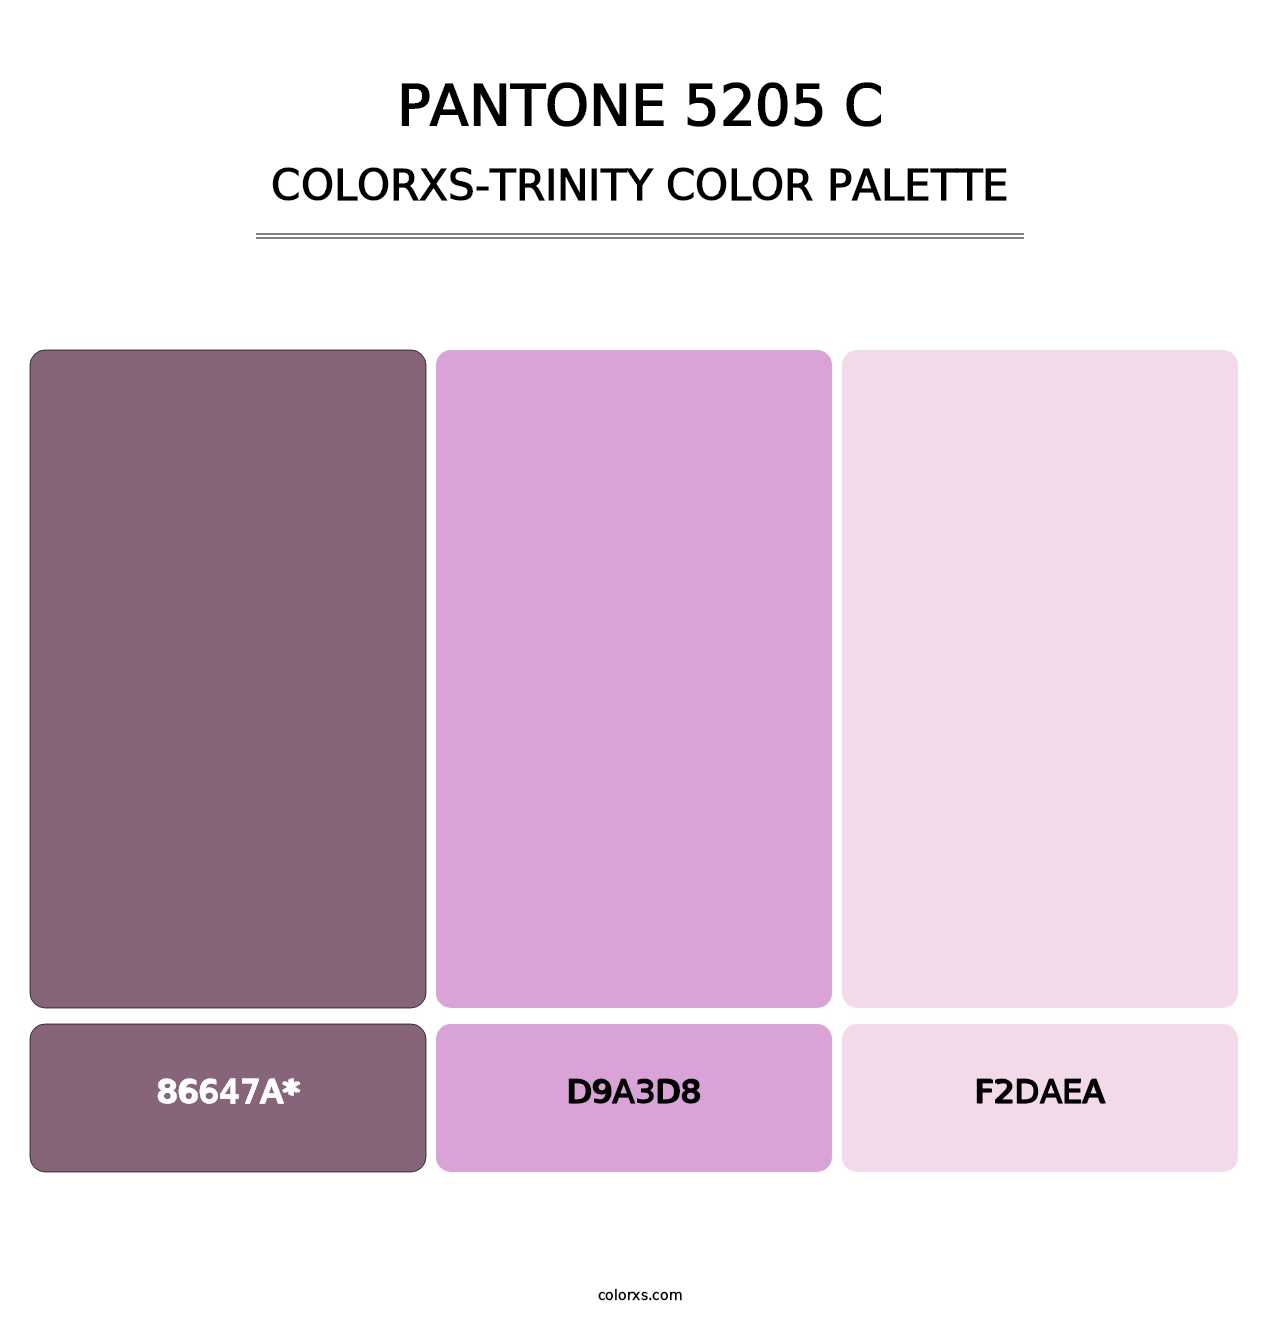 PANTONE 5205 C - Colorxs Trinity Palette